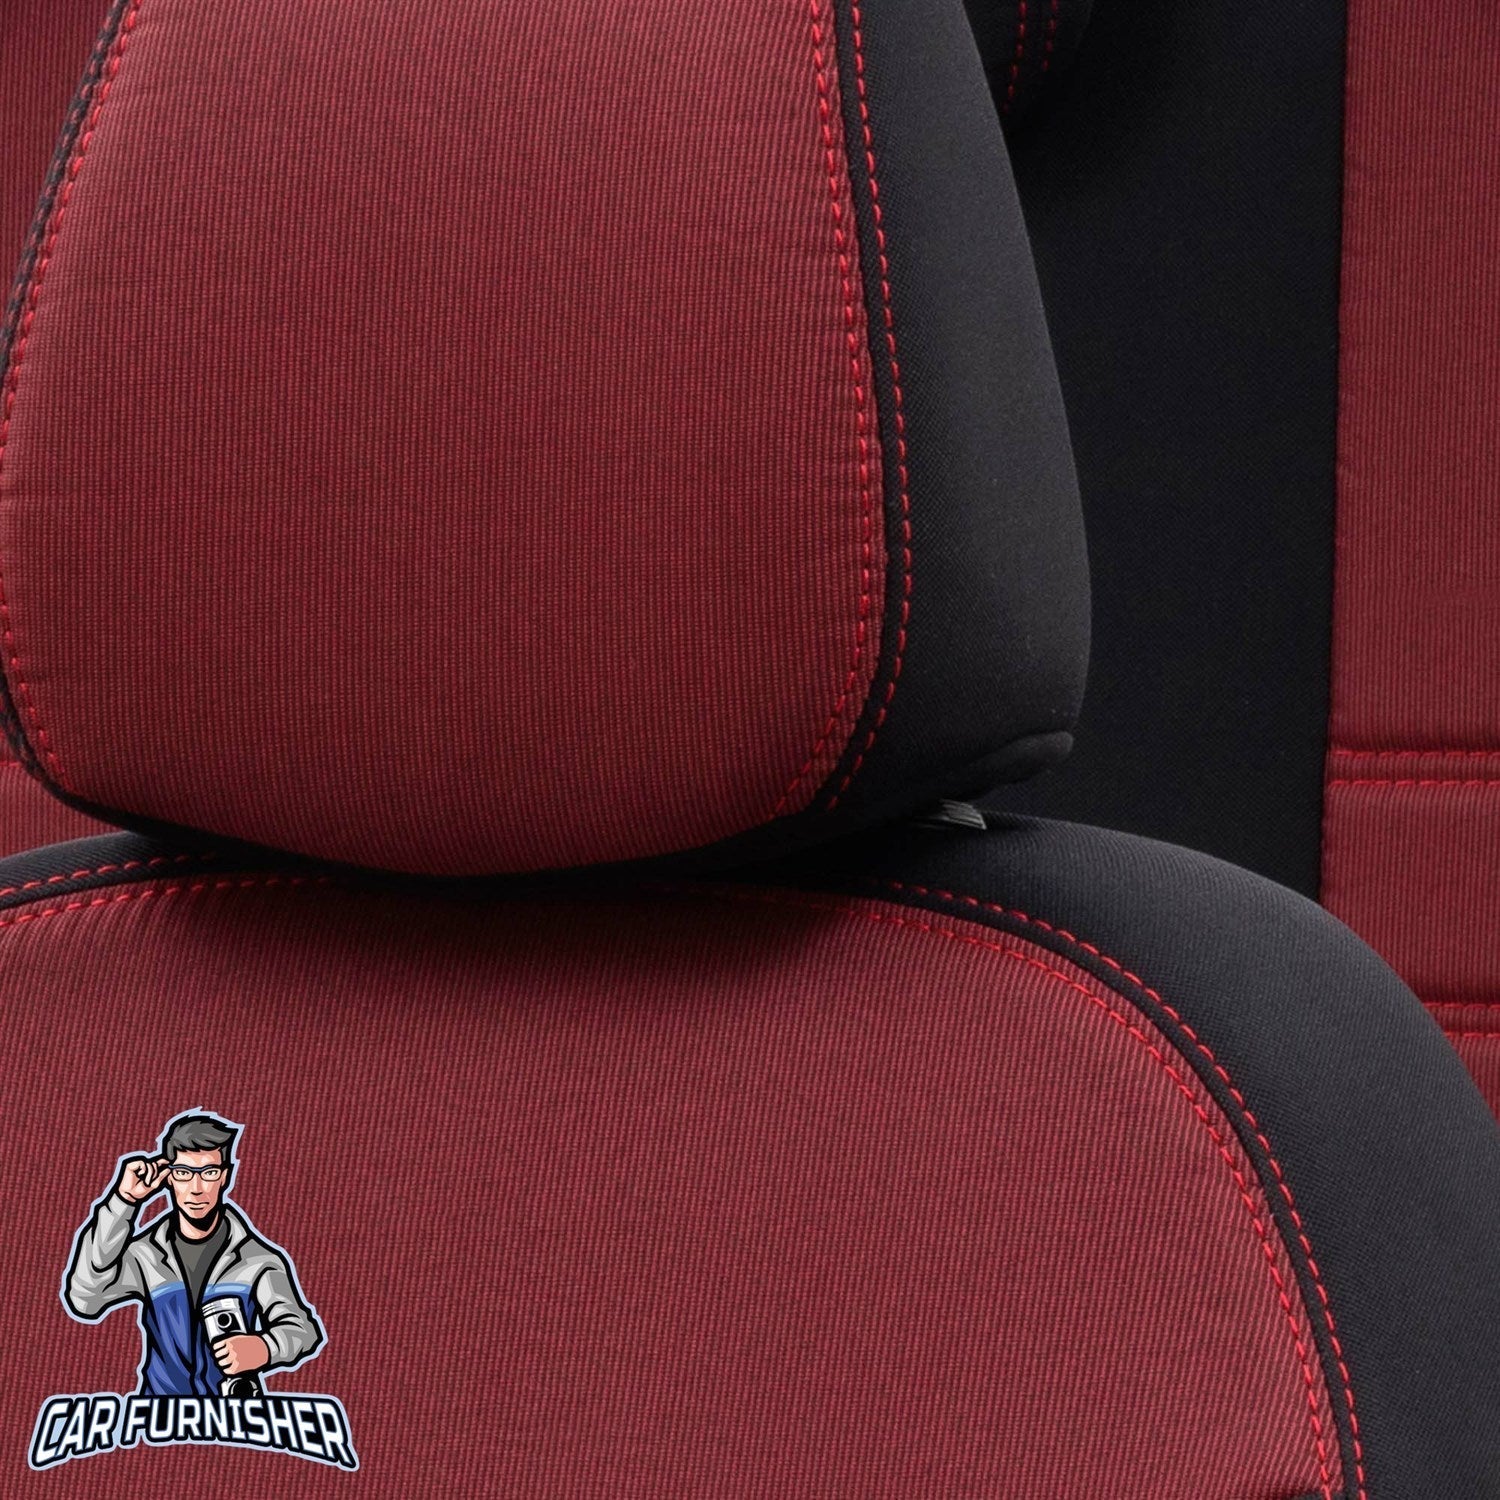 Tesla Model Y Seat Cover Original Jacquard Design Red Jacquard Fabric